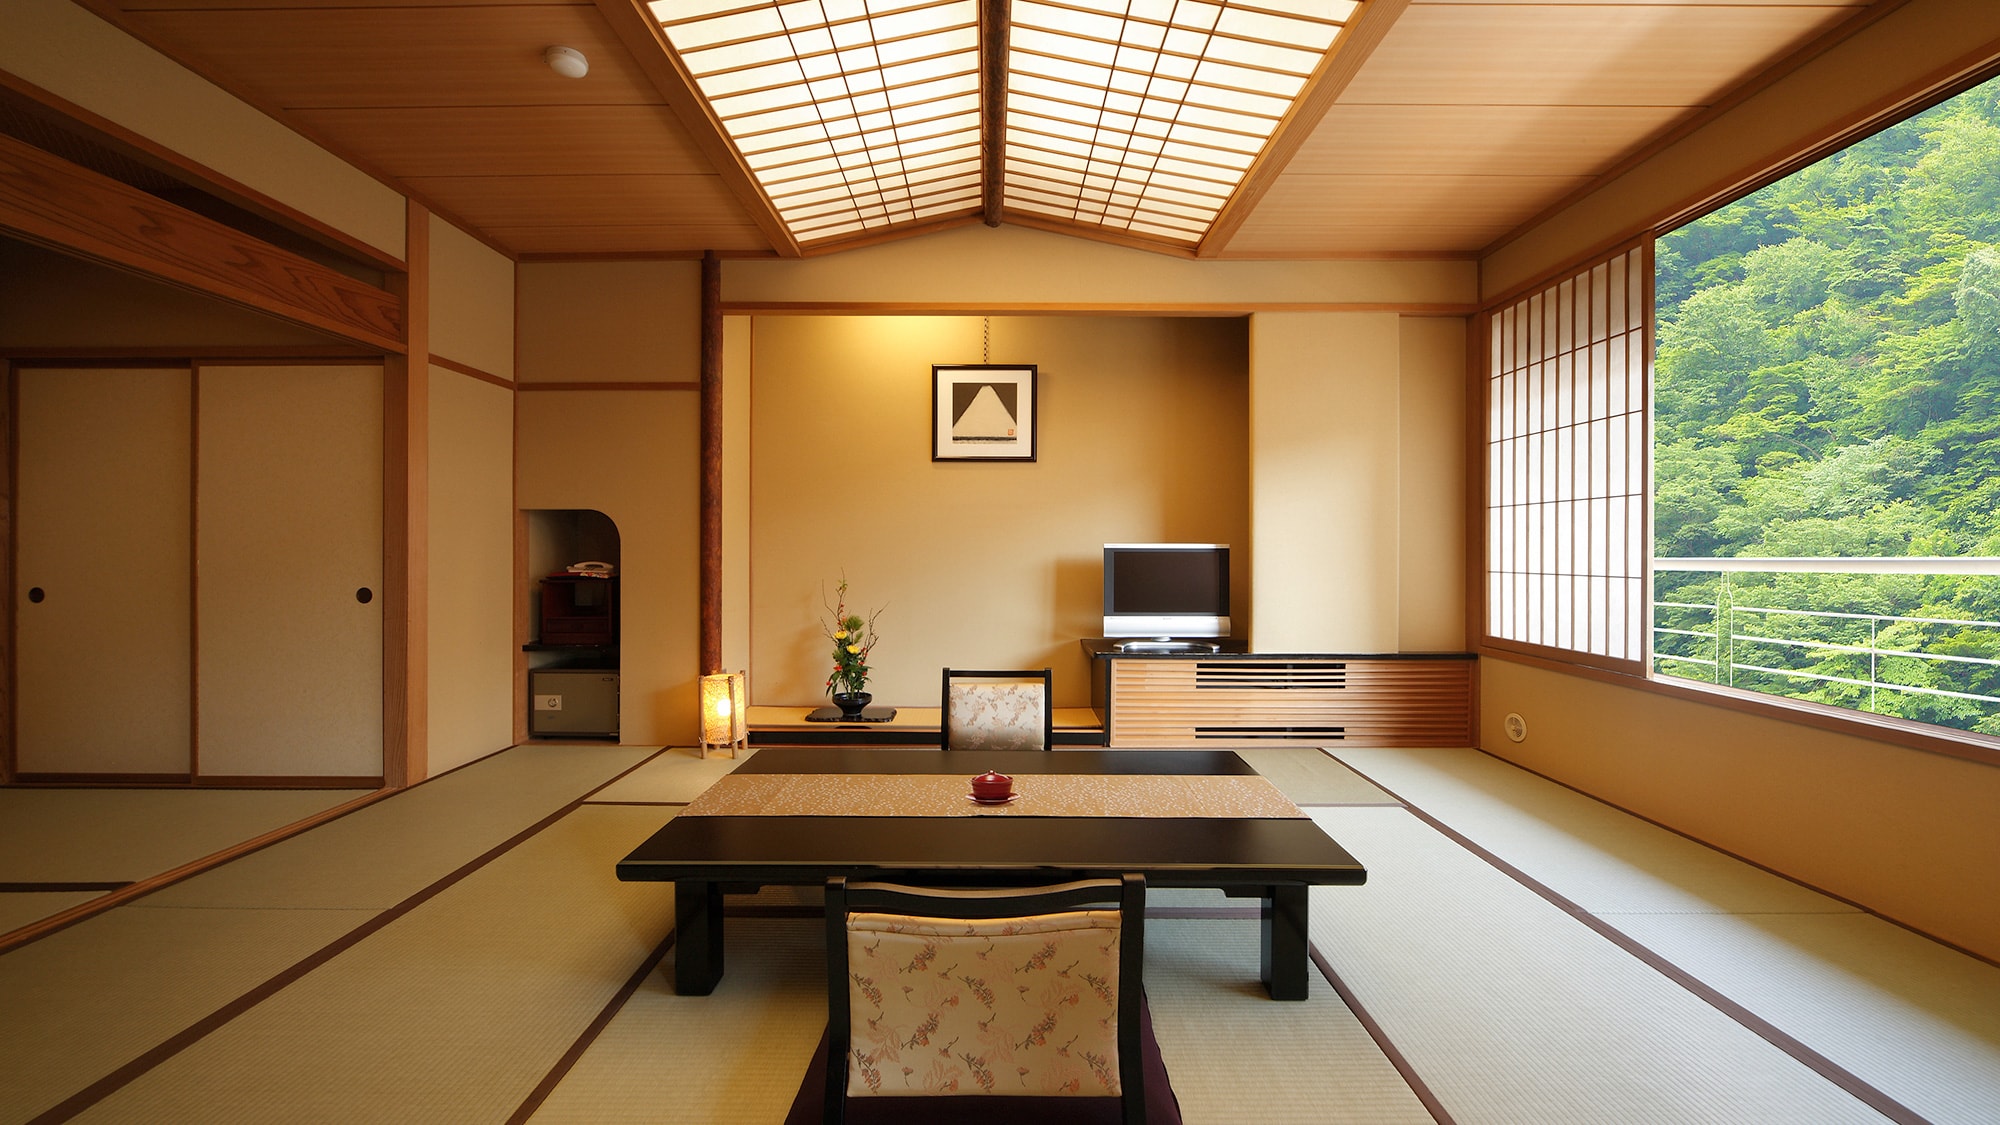 ■ Riraku Room (Room with Massage Chair)